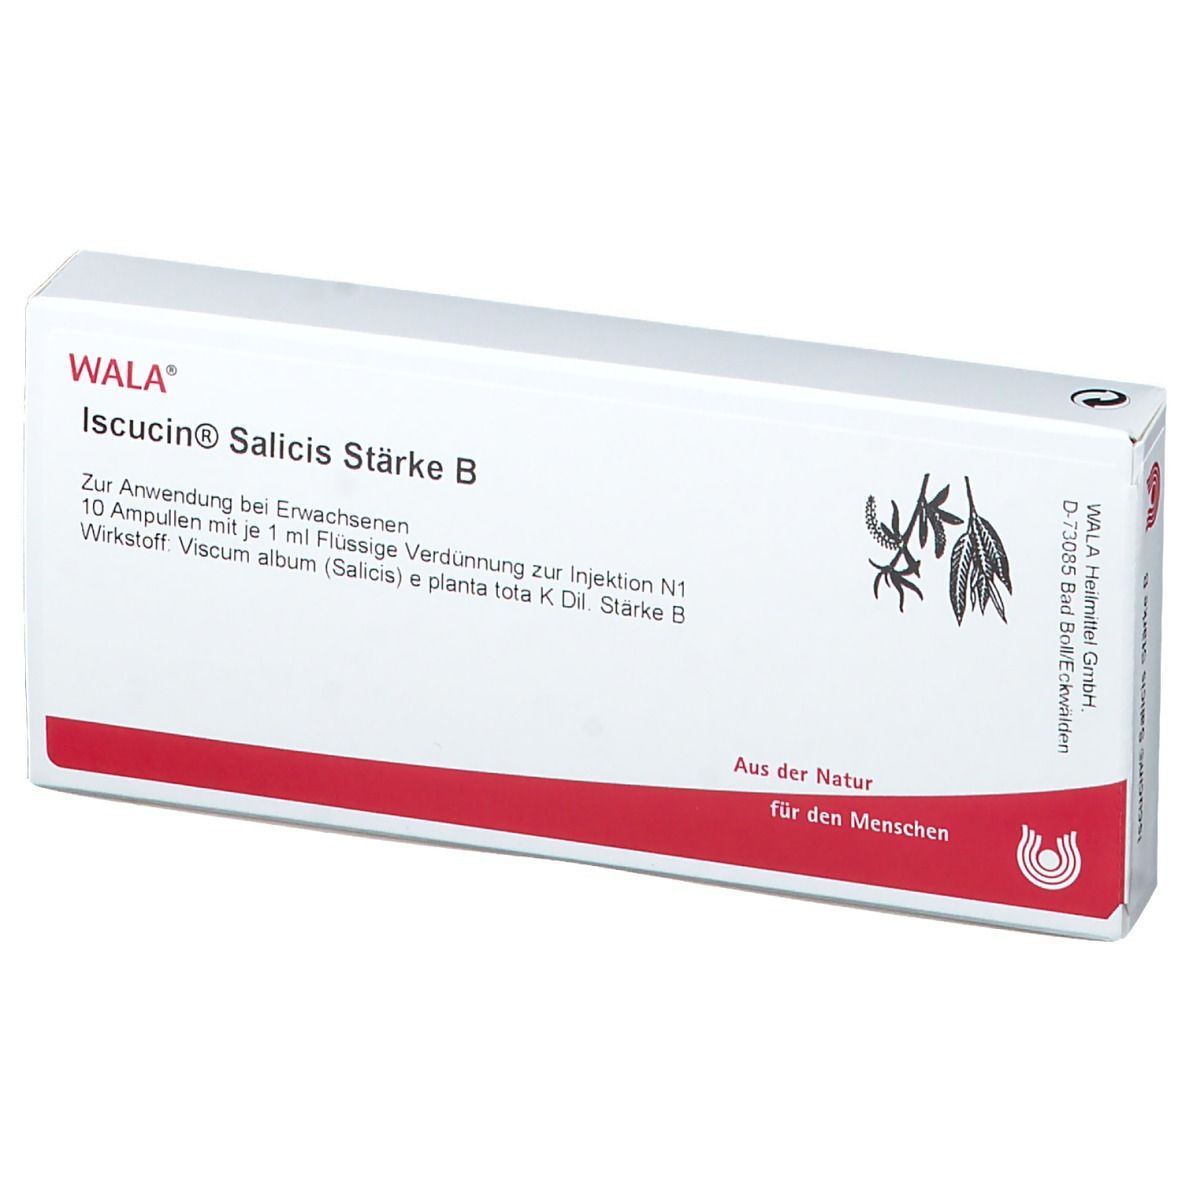 WALA® Iscucin Salicis Staerke B Amp.